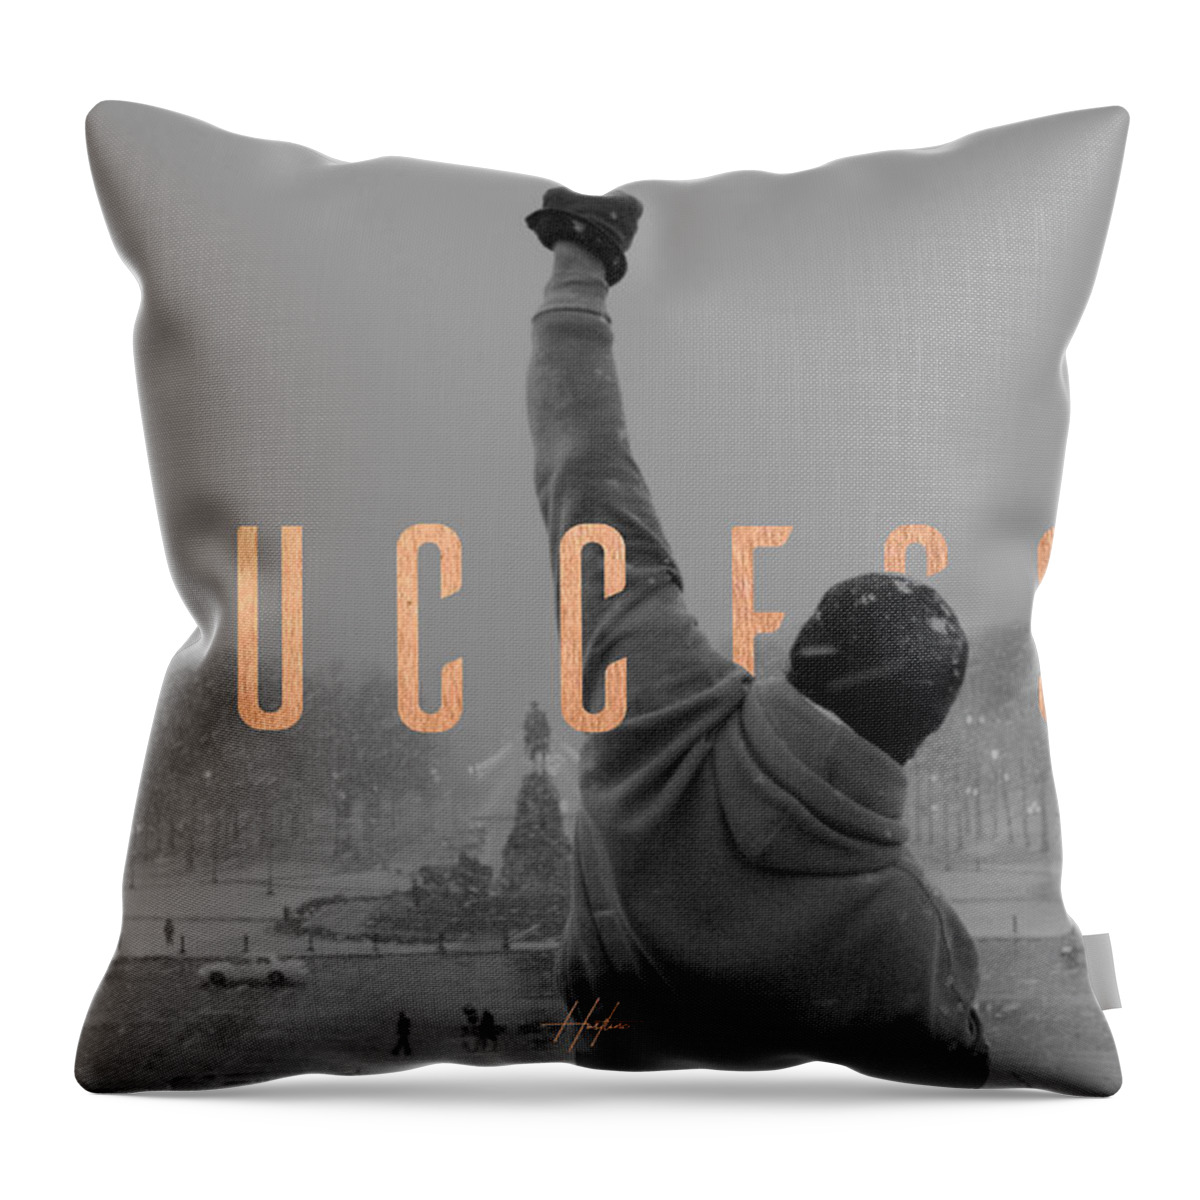  Throw Pillow featuring the digital art Success by Hustlinc